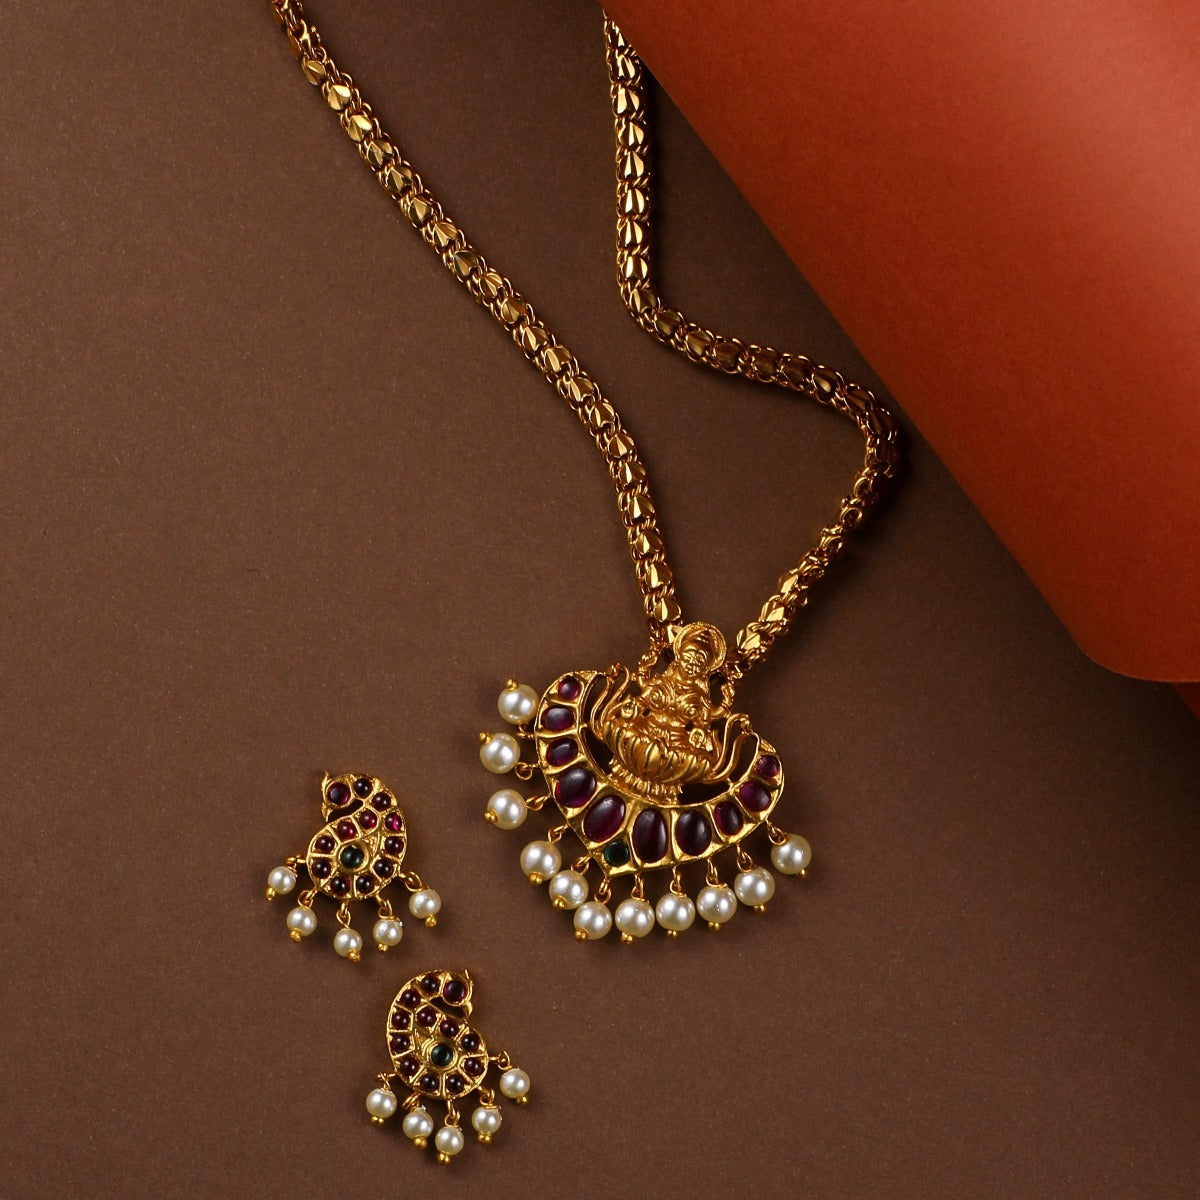 Buy Lab Grown Diamond Necklace and Earring Set Online - Avira Diamonds